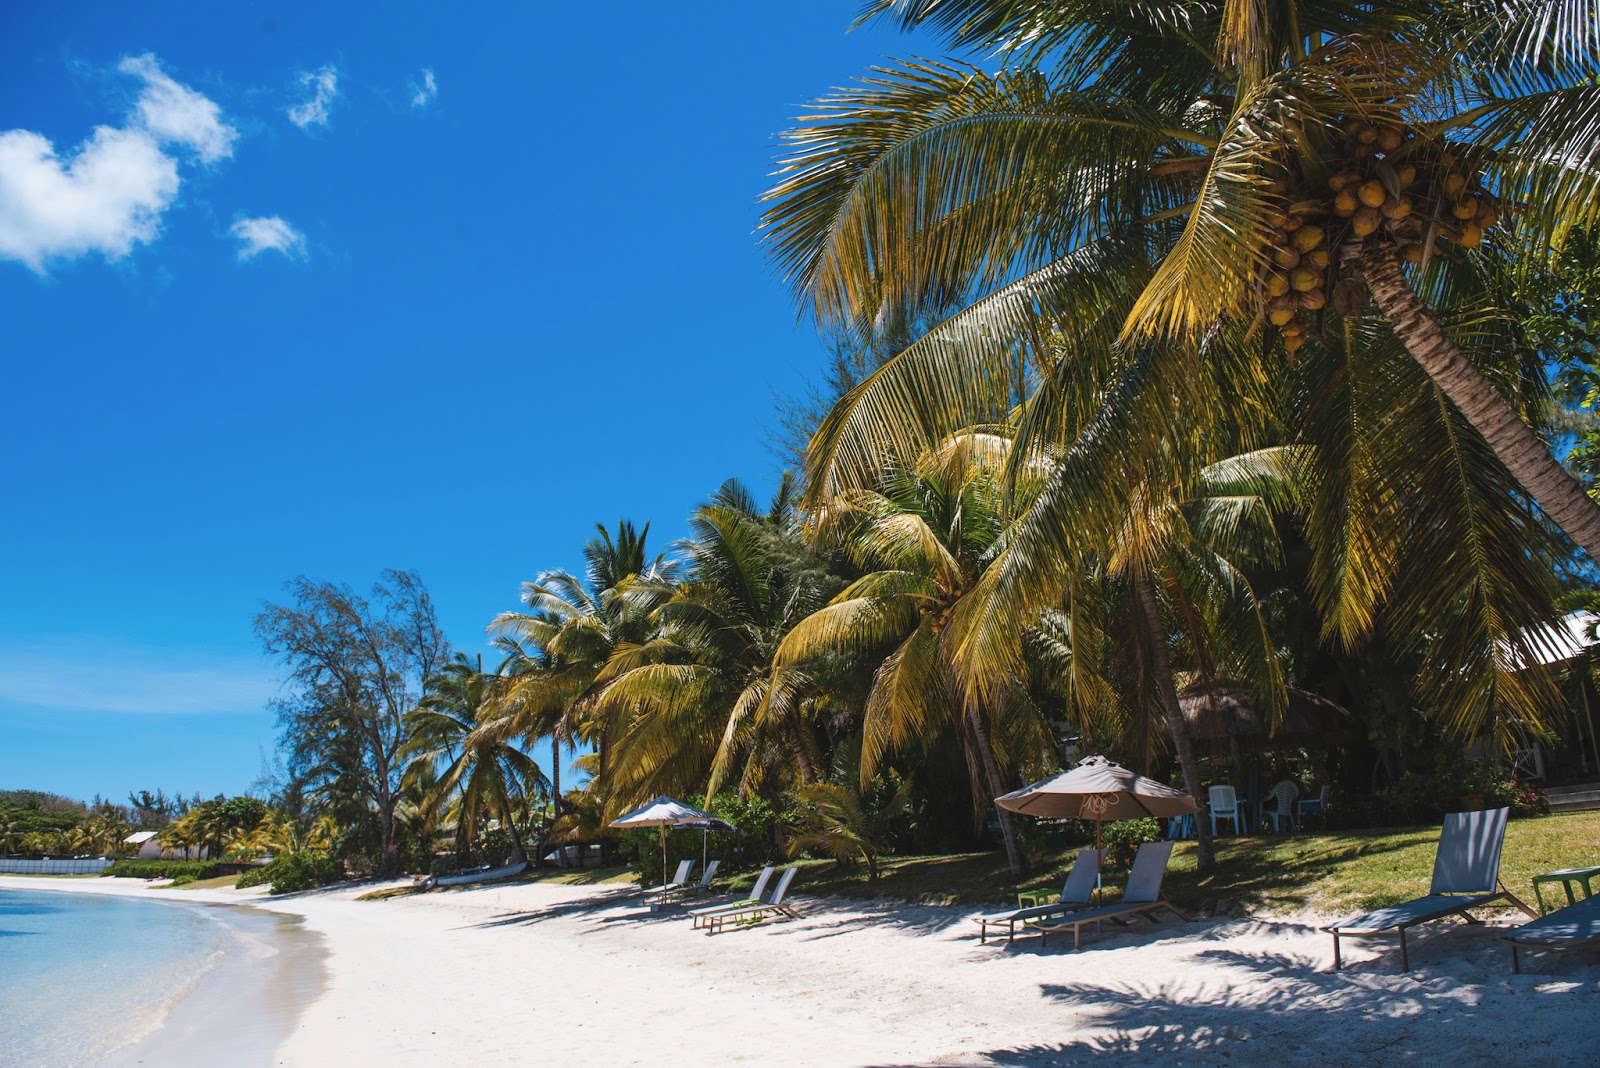 CocoNuts Resot Beach'in fotoğrafı kısmen otel alanı